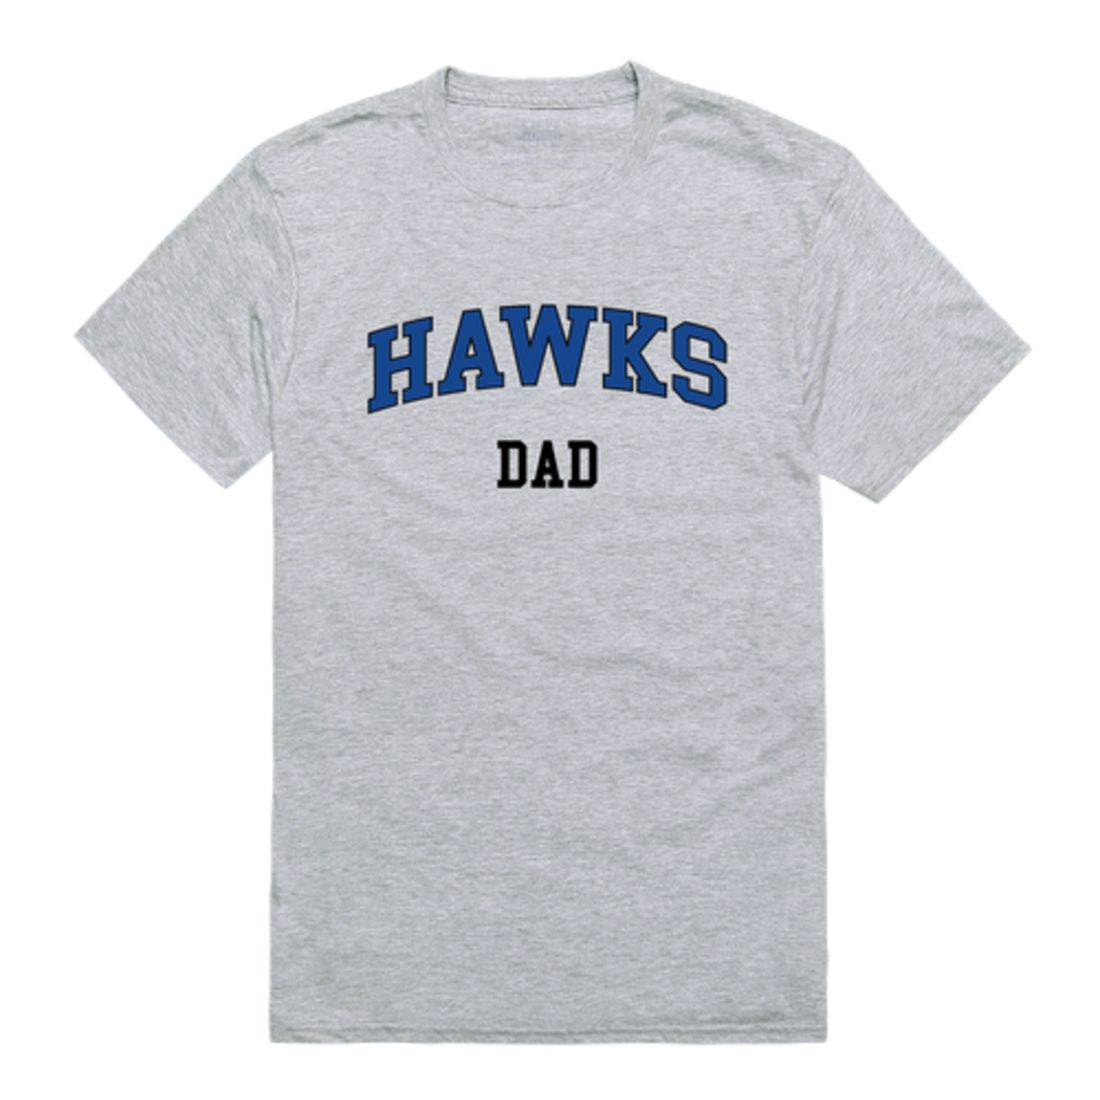 Hartwick College Hawks Mom T-Shirt